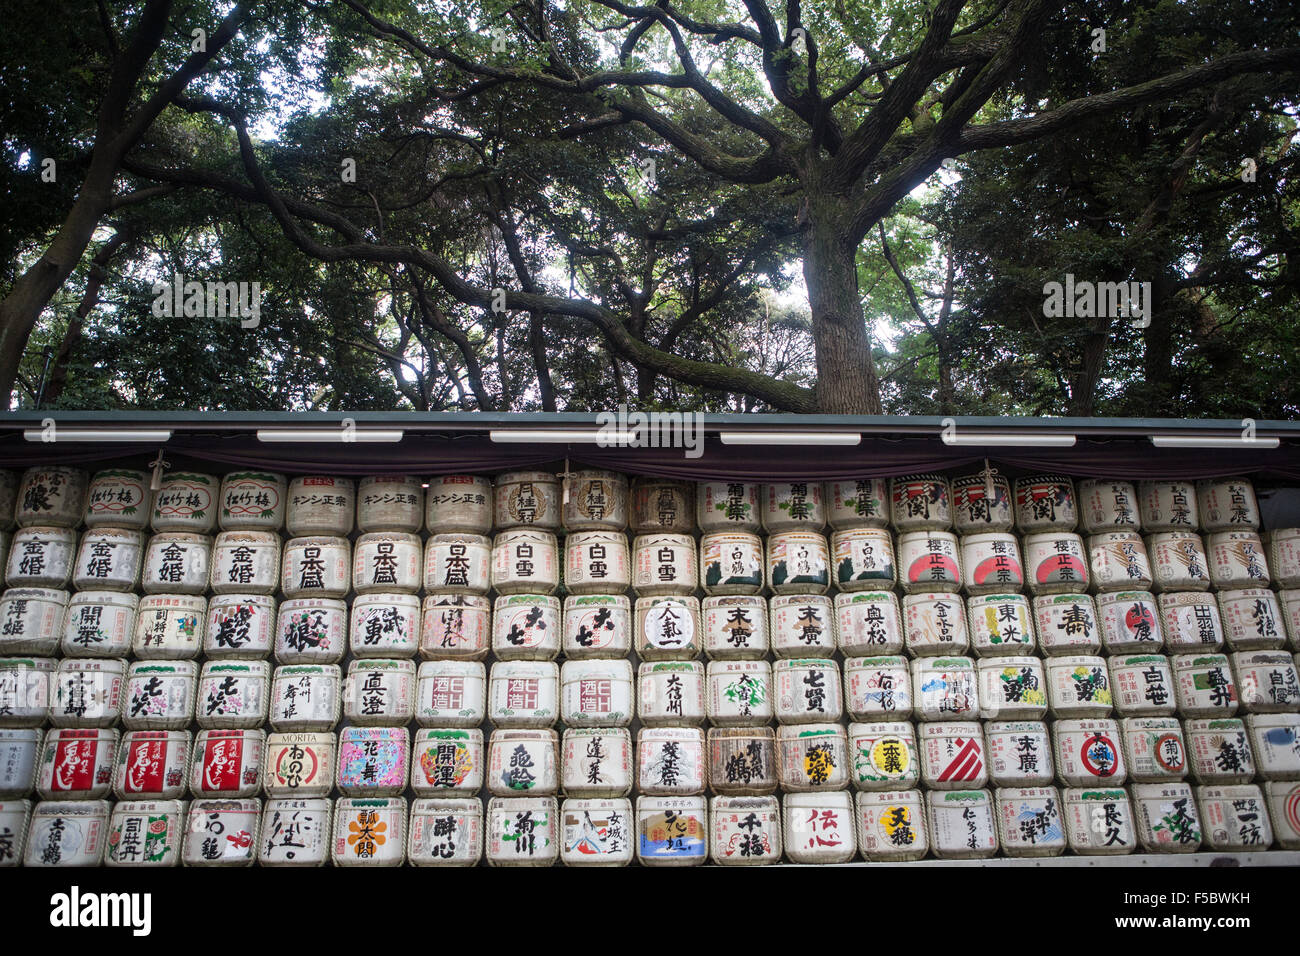 Sake barrels at Yoyogi park Stock Photo